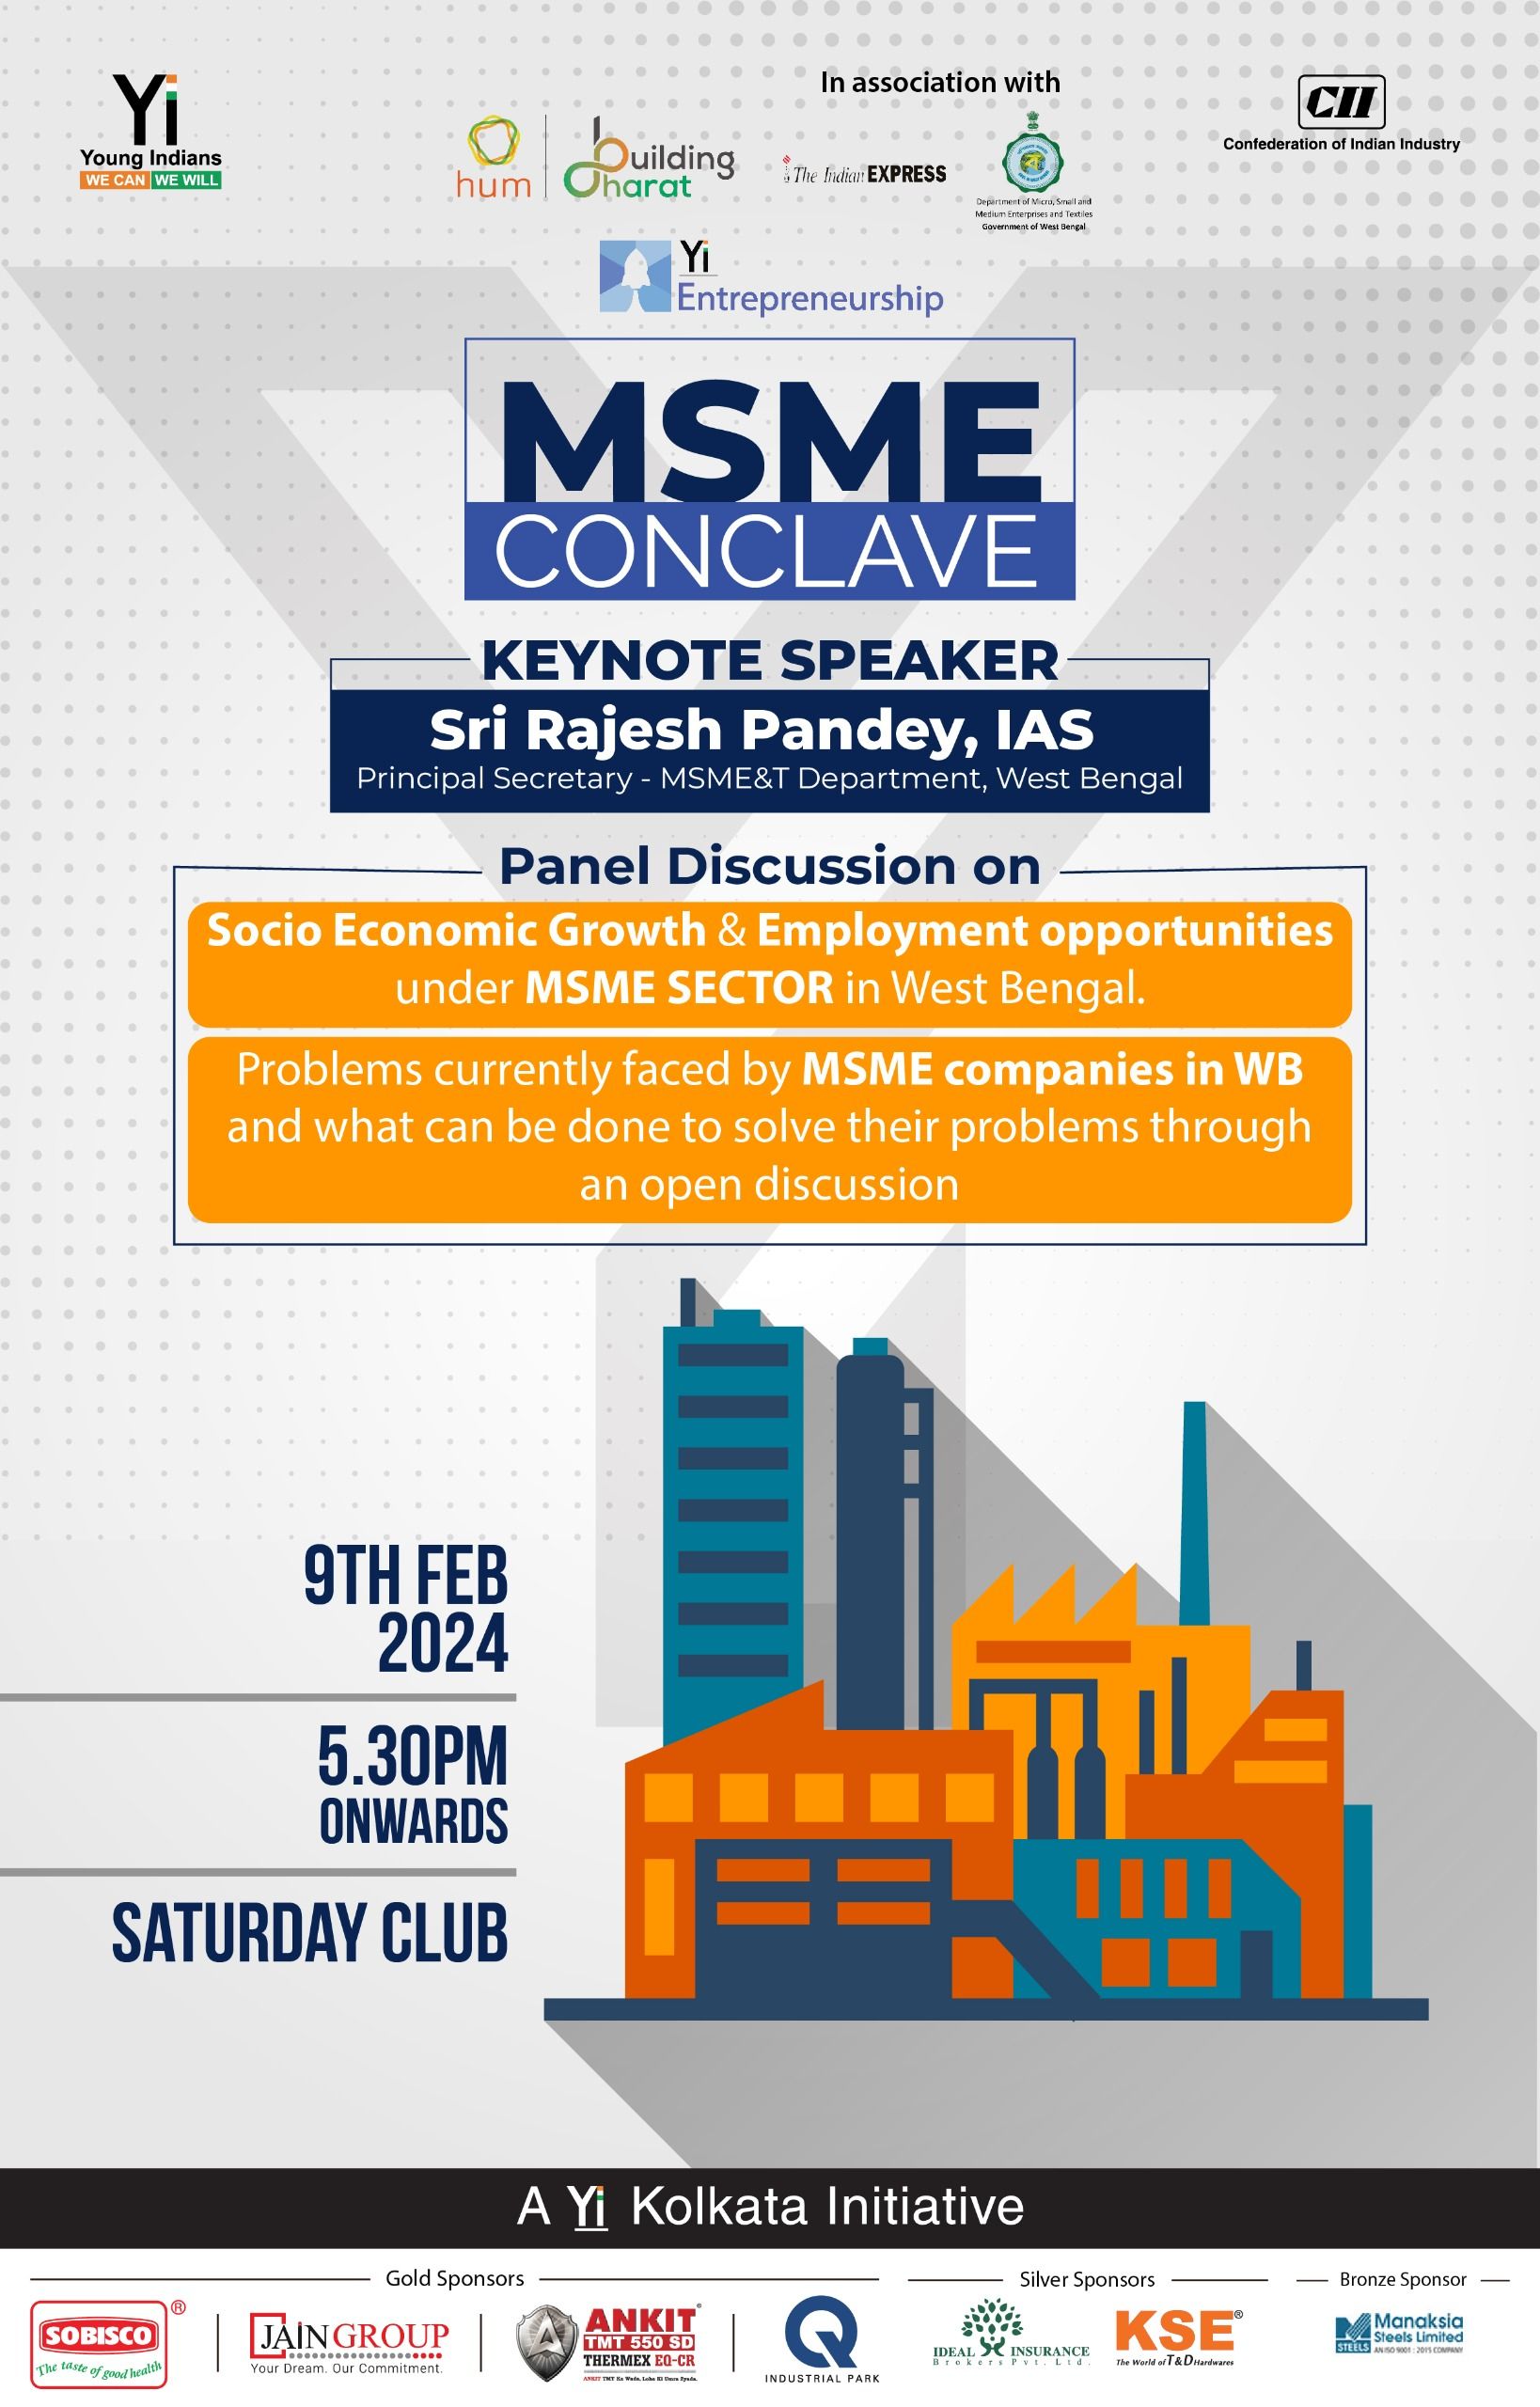 Yi24 | Entrepreneurship - MSME Conclave Announcement